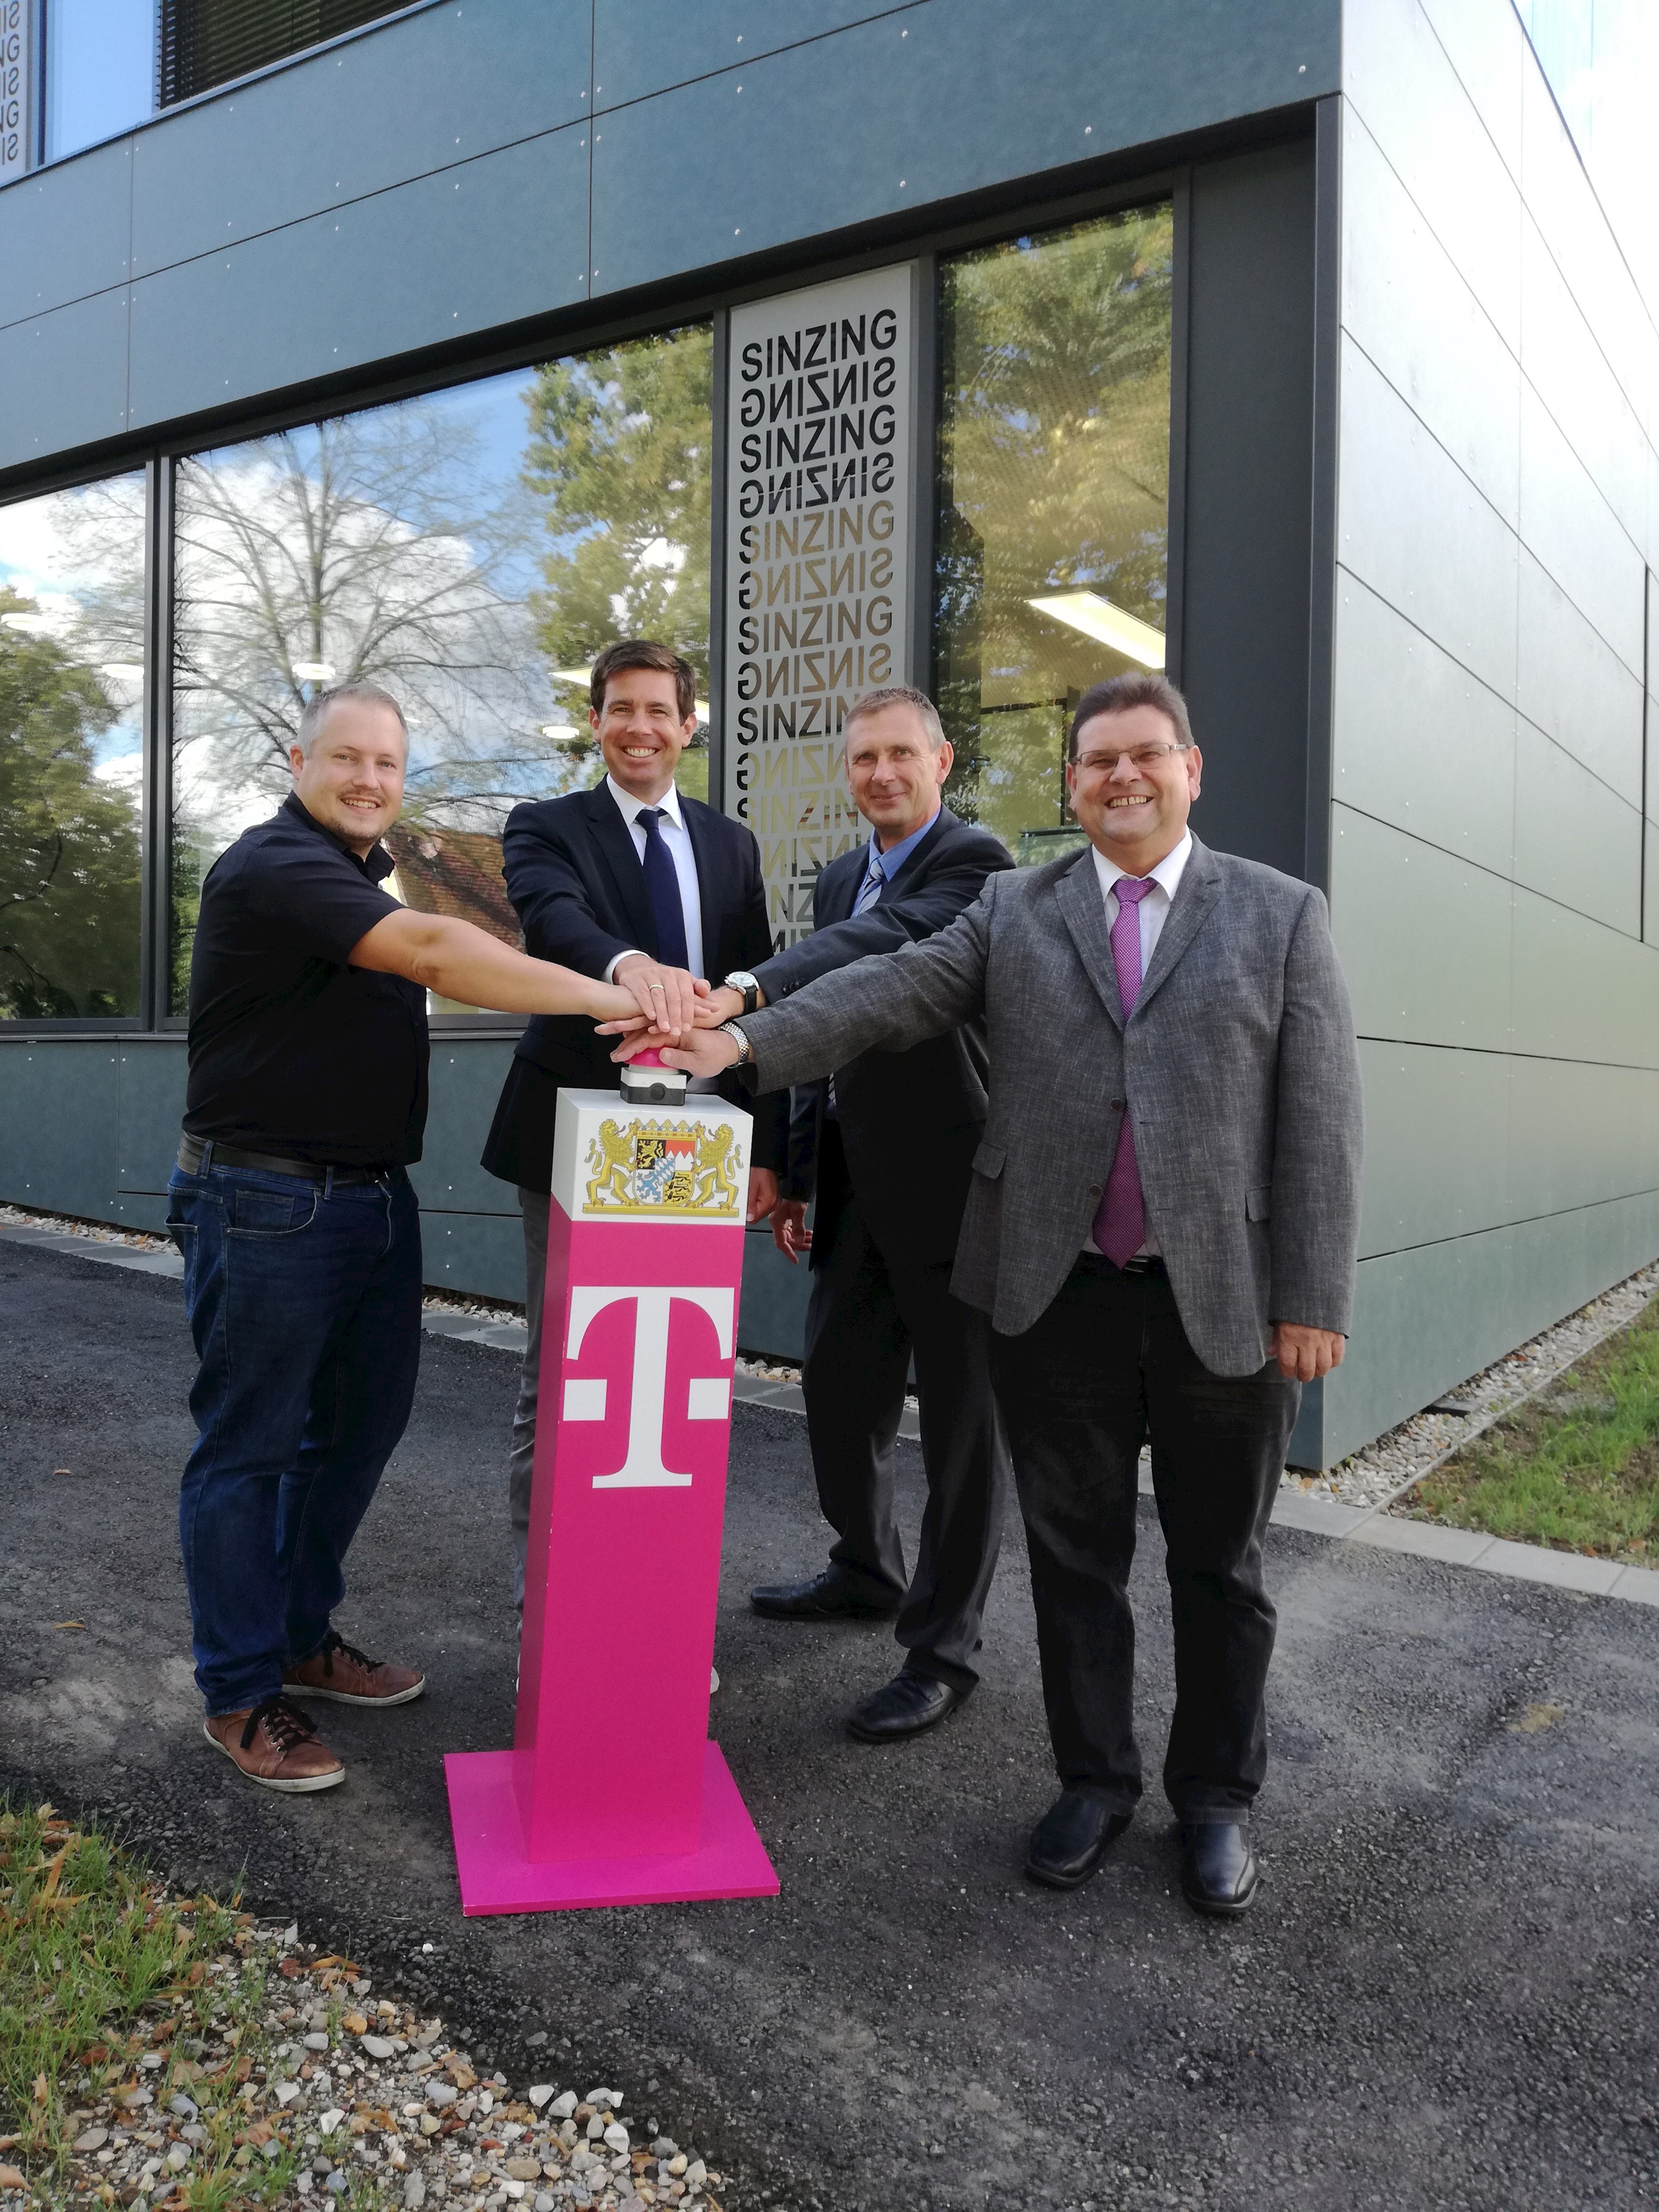 v.l.n.r. Hr. Bodemer (Breitbandbeauftragter), Hr. Patrick Grossmann (Erster Bürgermeister), Hr. Hanke (Telekom), Hr. Köckeis (Telekom)